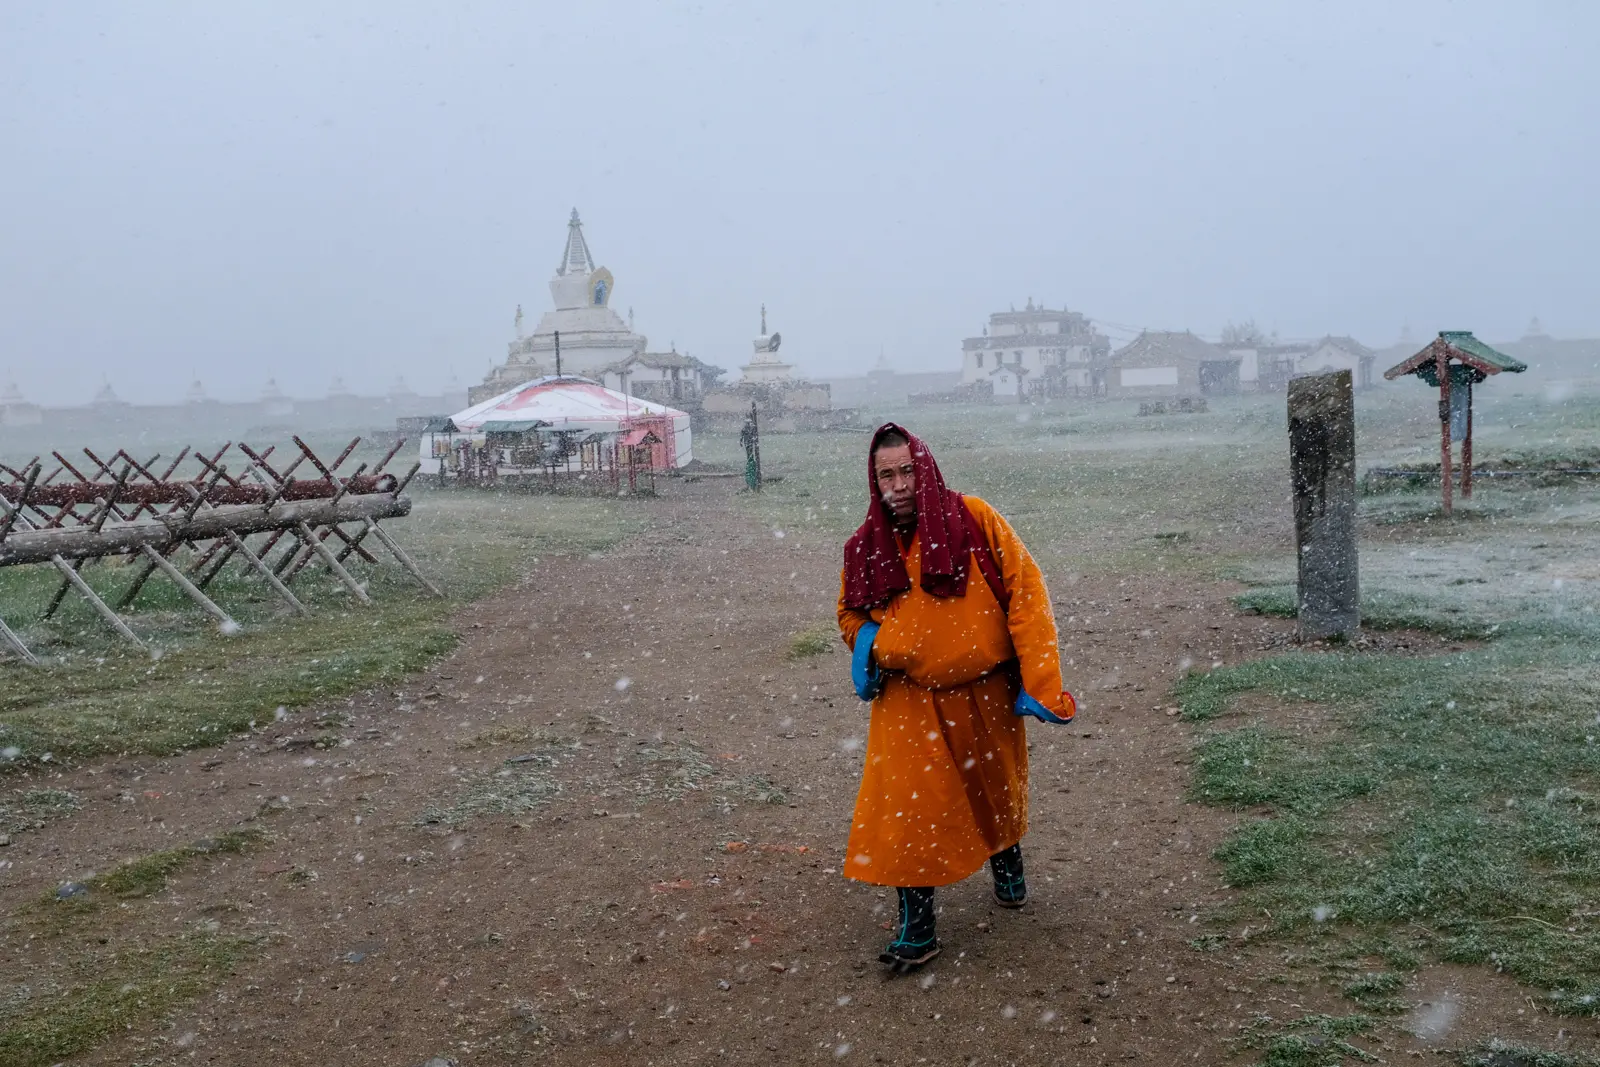 Bhuddist monk in the snowy Erdene Zuu Monastery, Mongolia